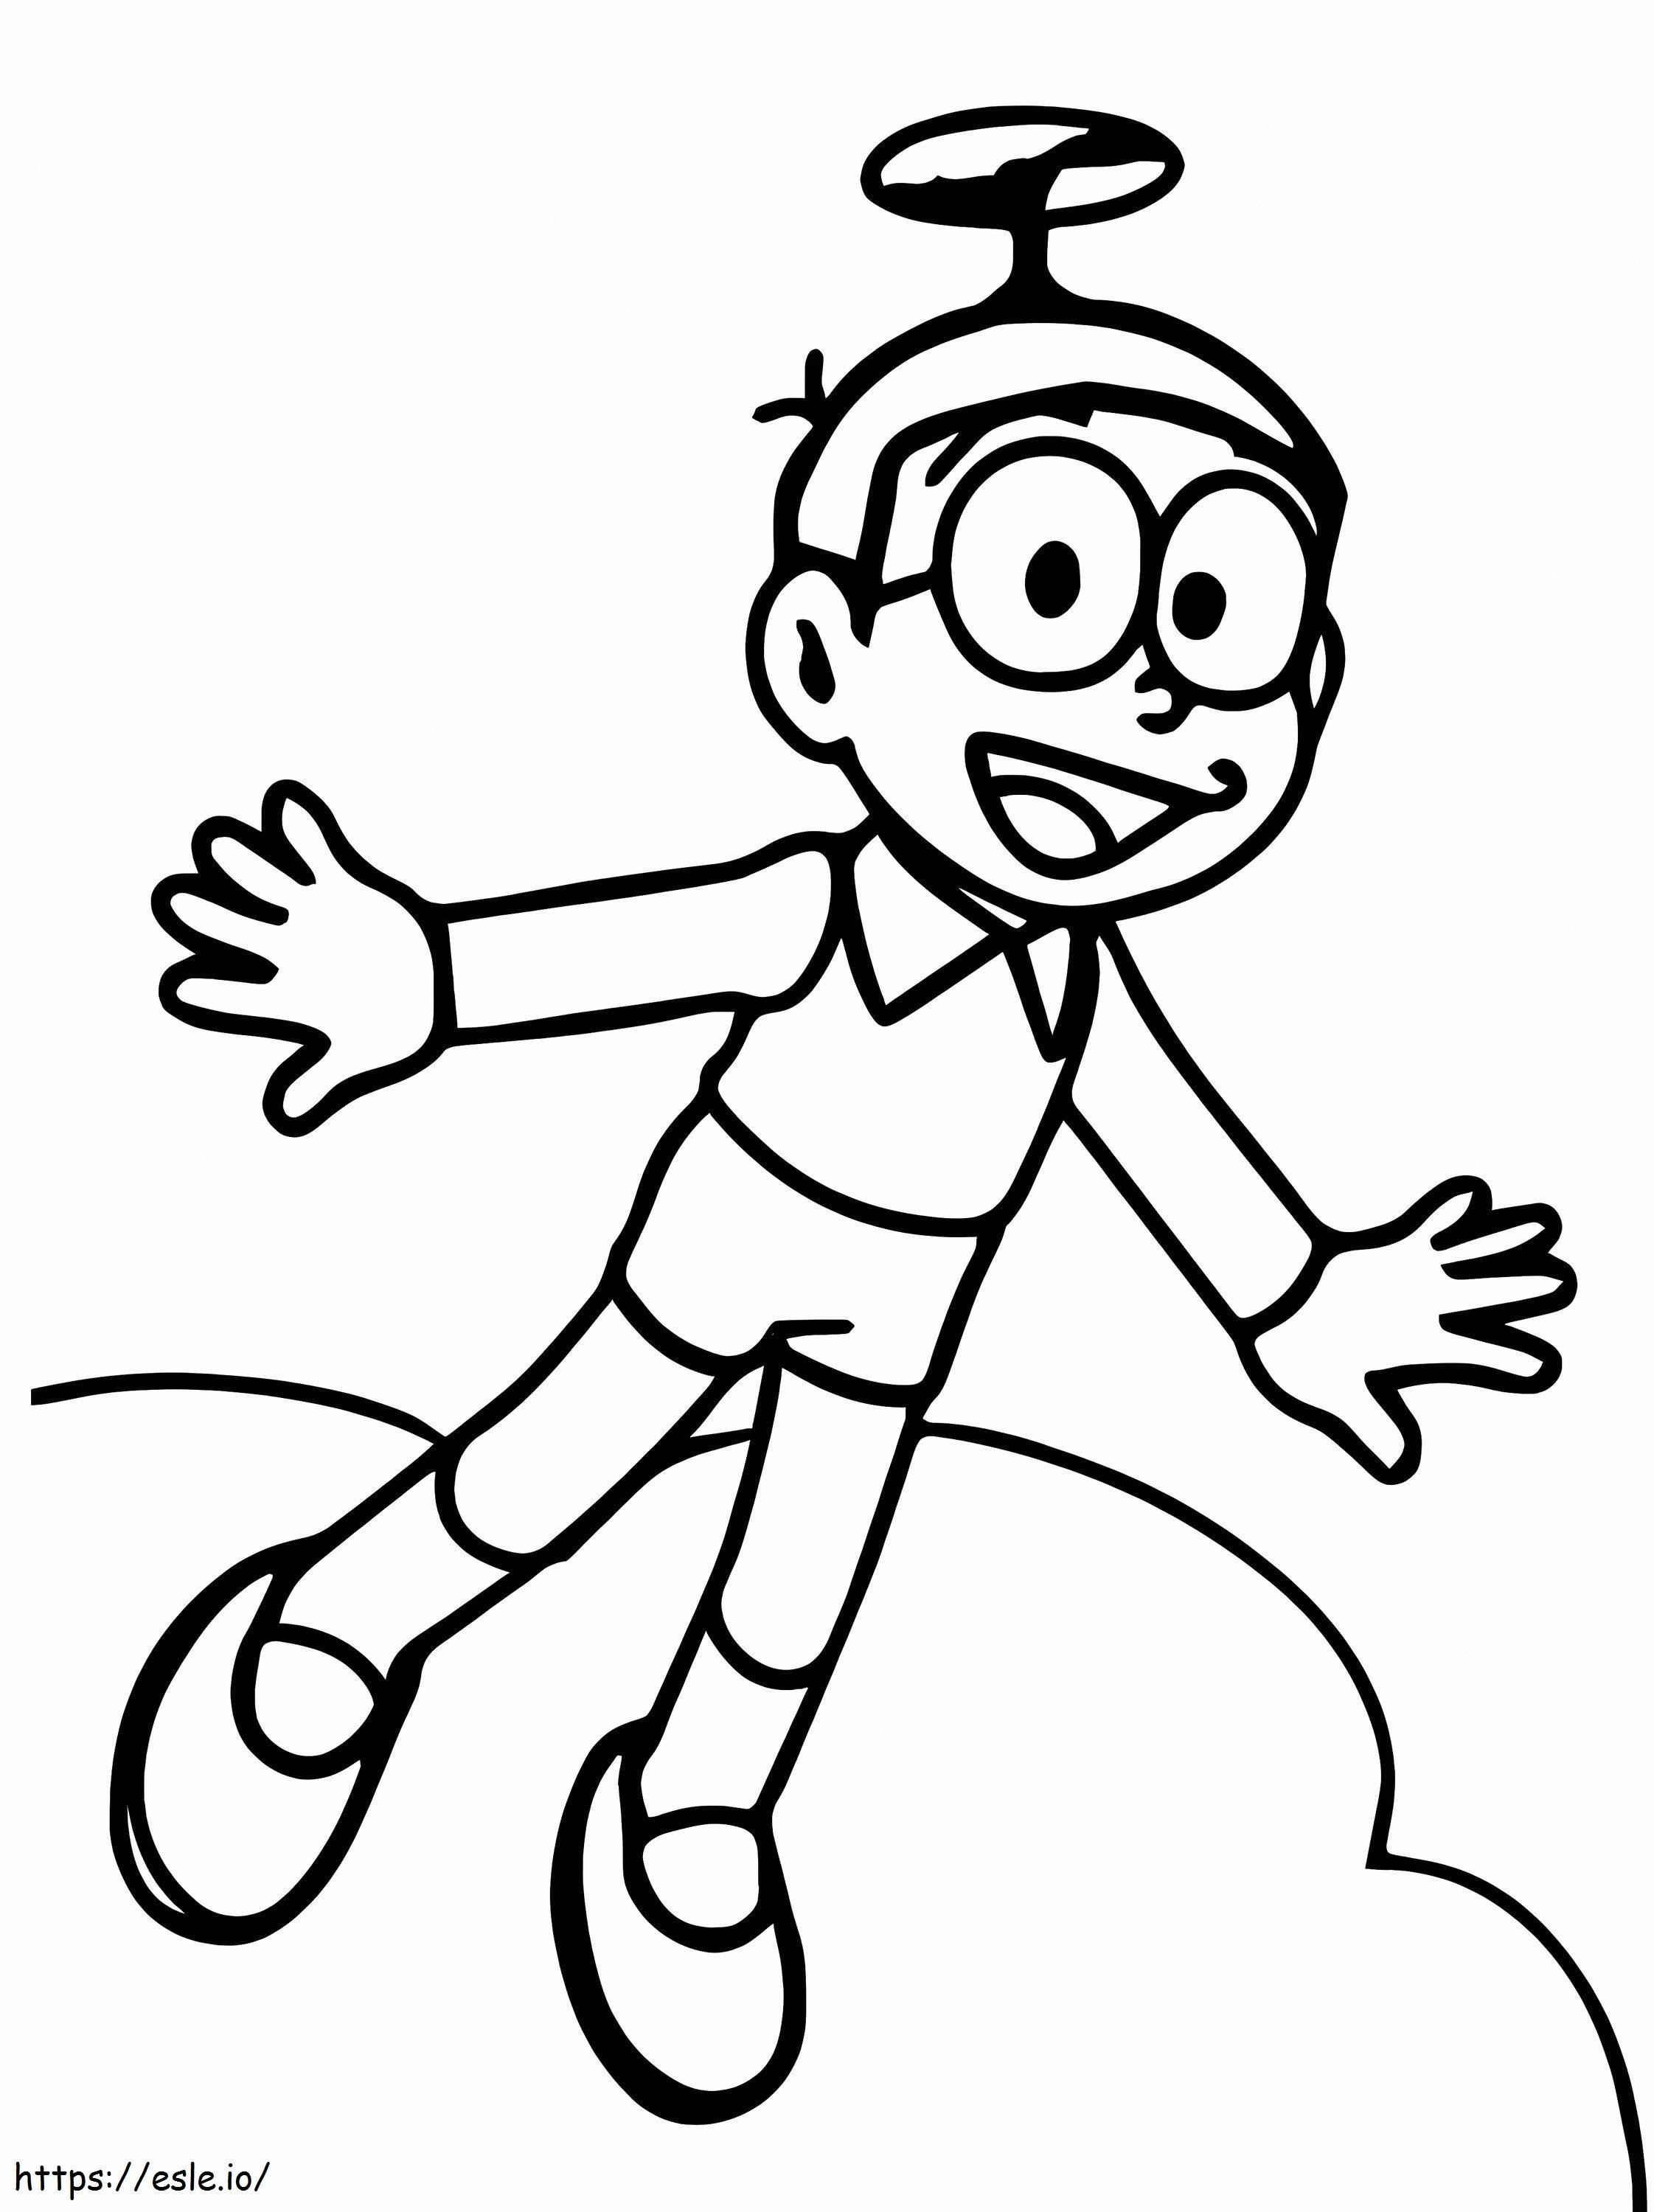 Latająca Nobita kolorowanka